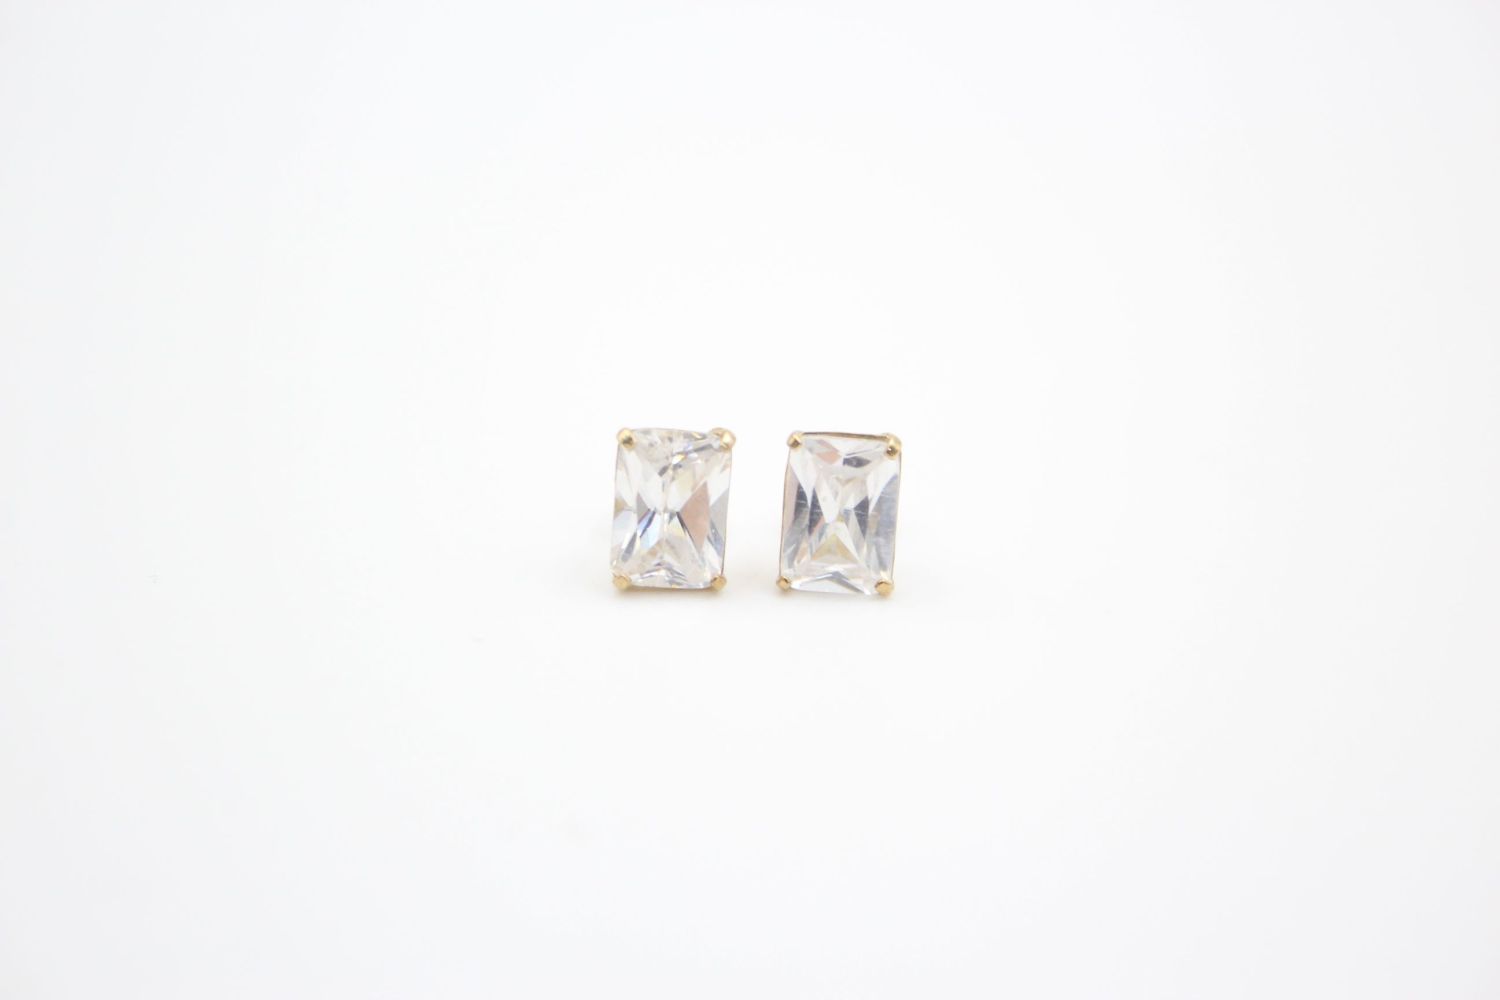 3 x 9ct gold gemstone stud earrings 2.9 grams gross - Image 2 of 11